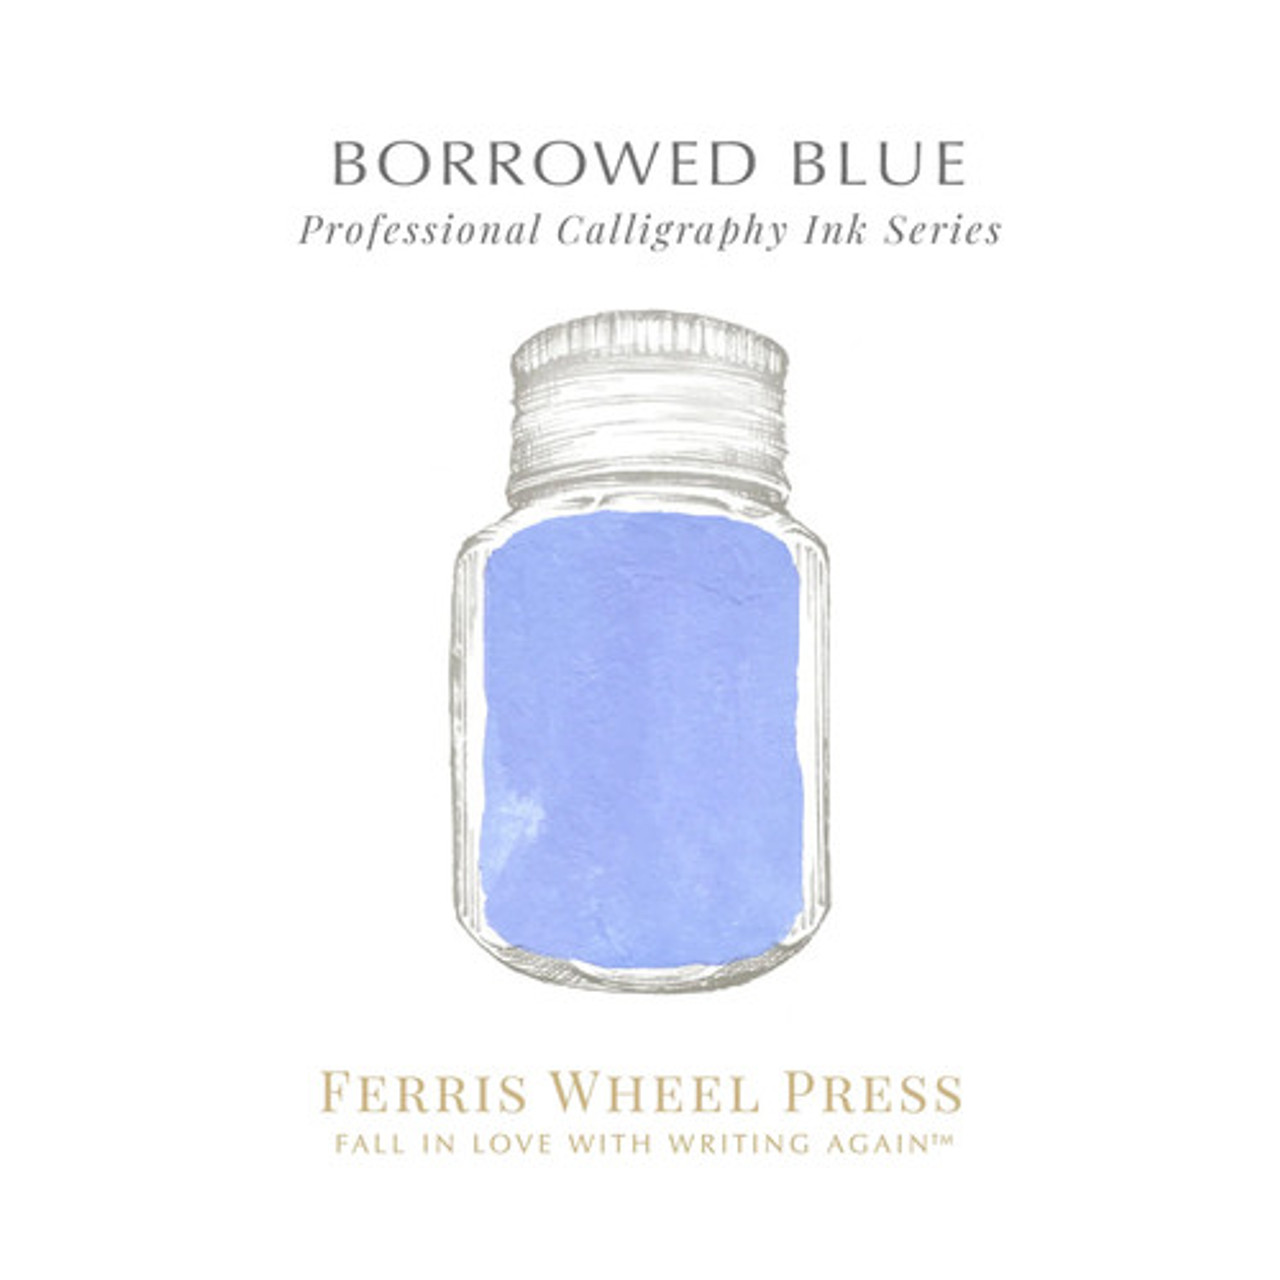 ferris wheel press ink writing samples : r/fountainpens